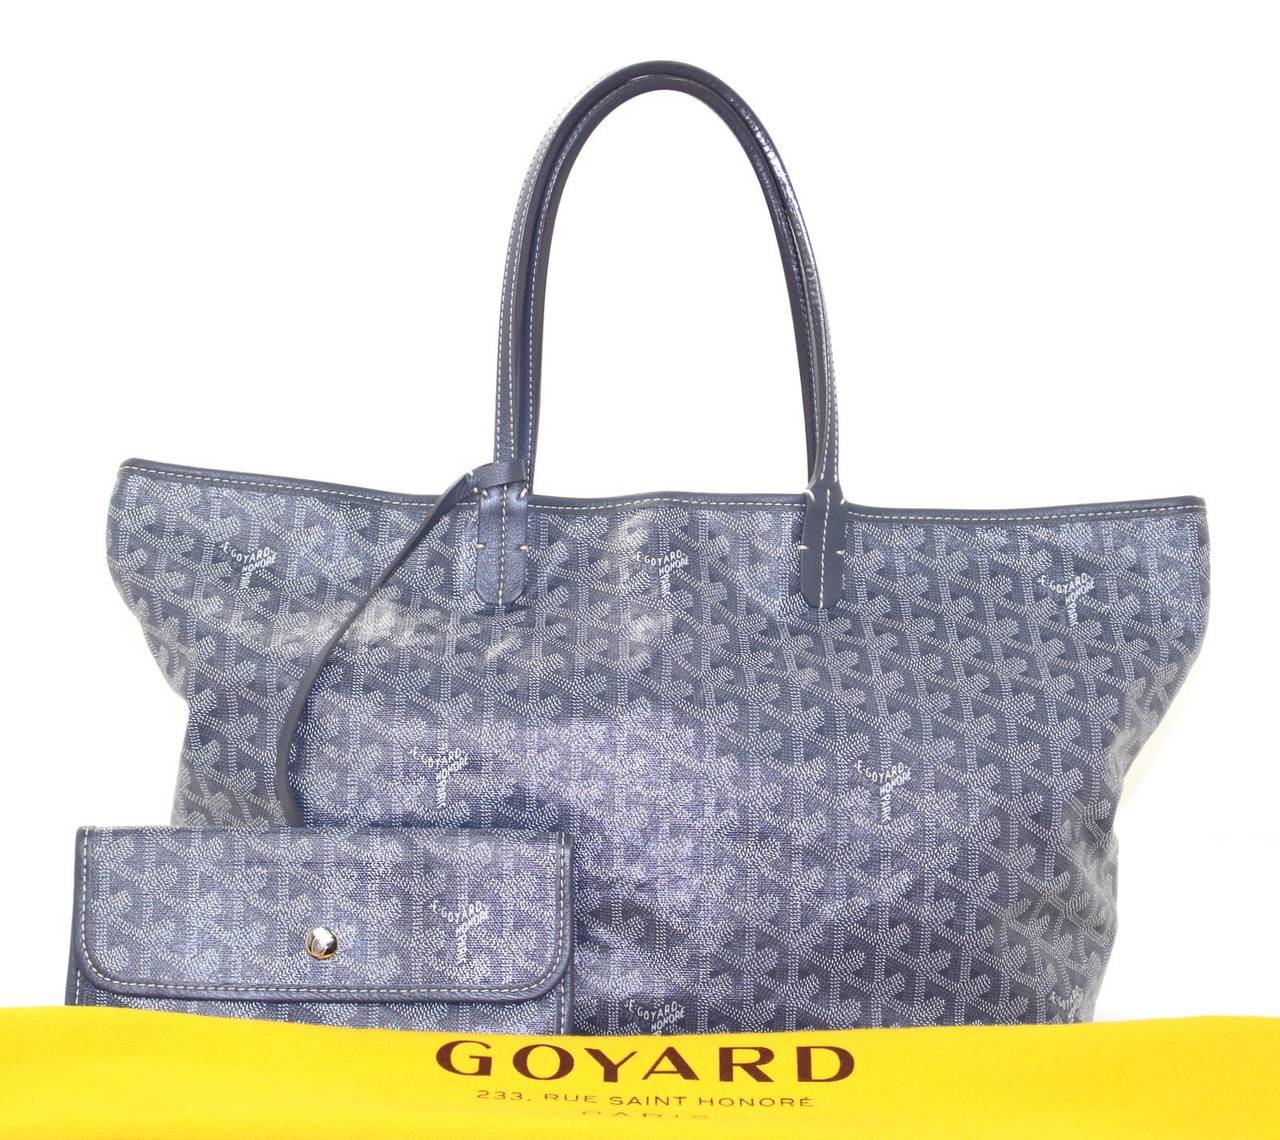 Goyard Bag Sizes Cm | SEMA Data Co-op